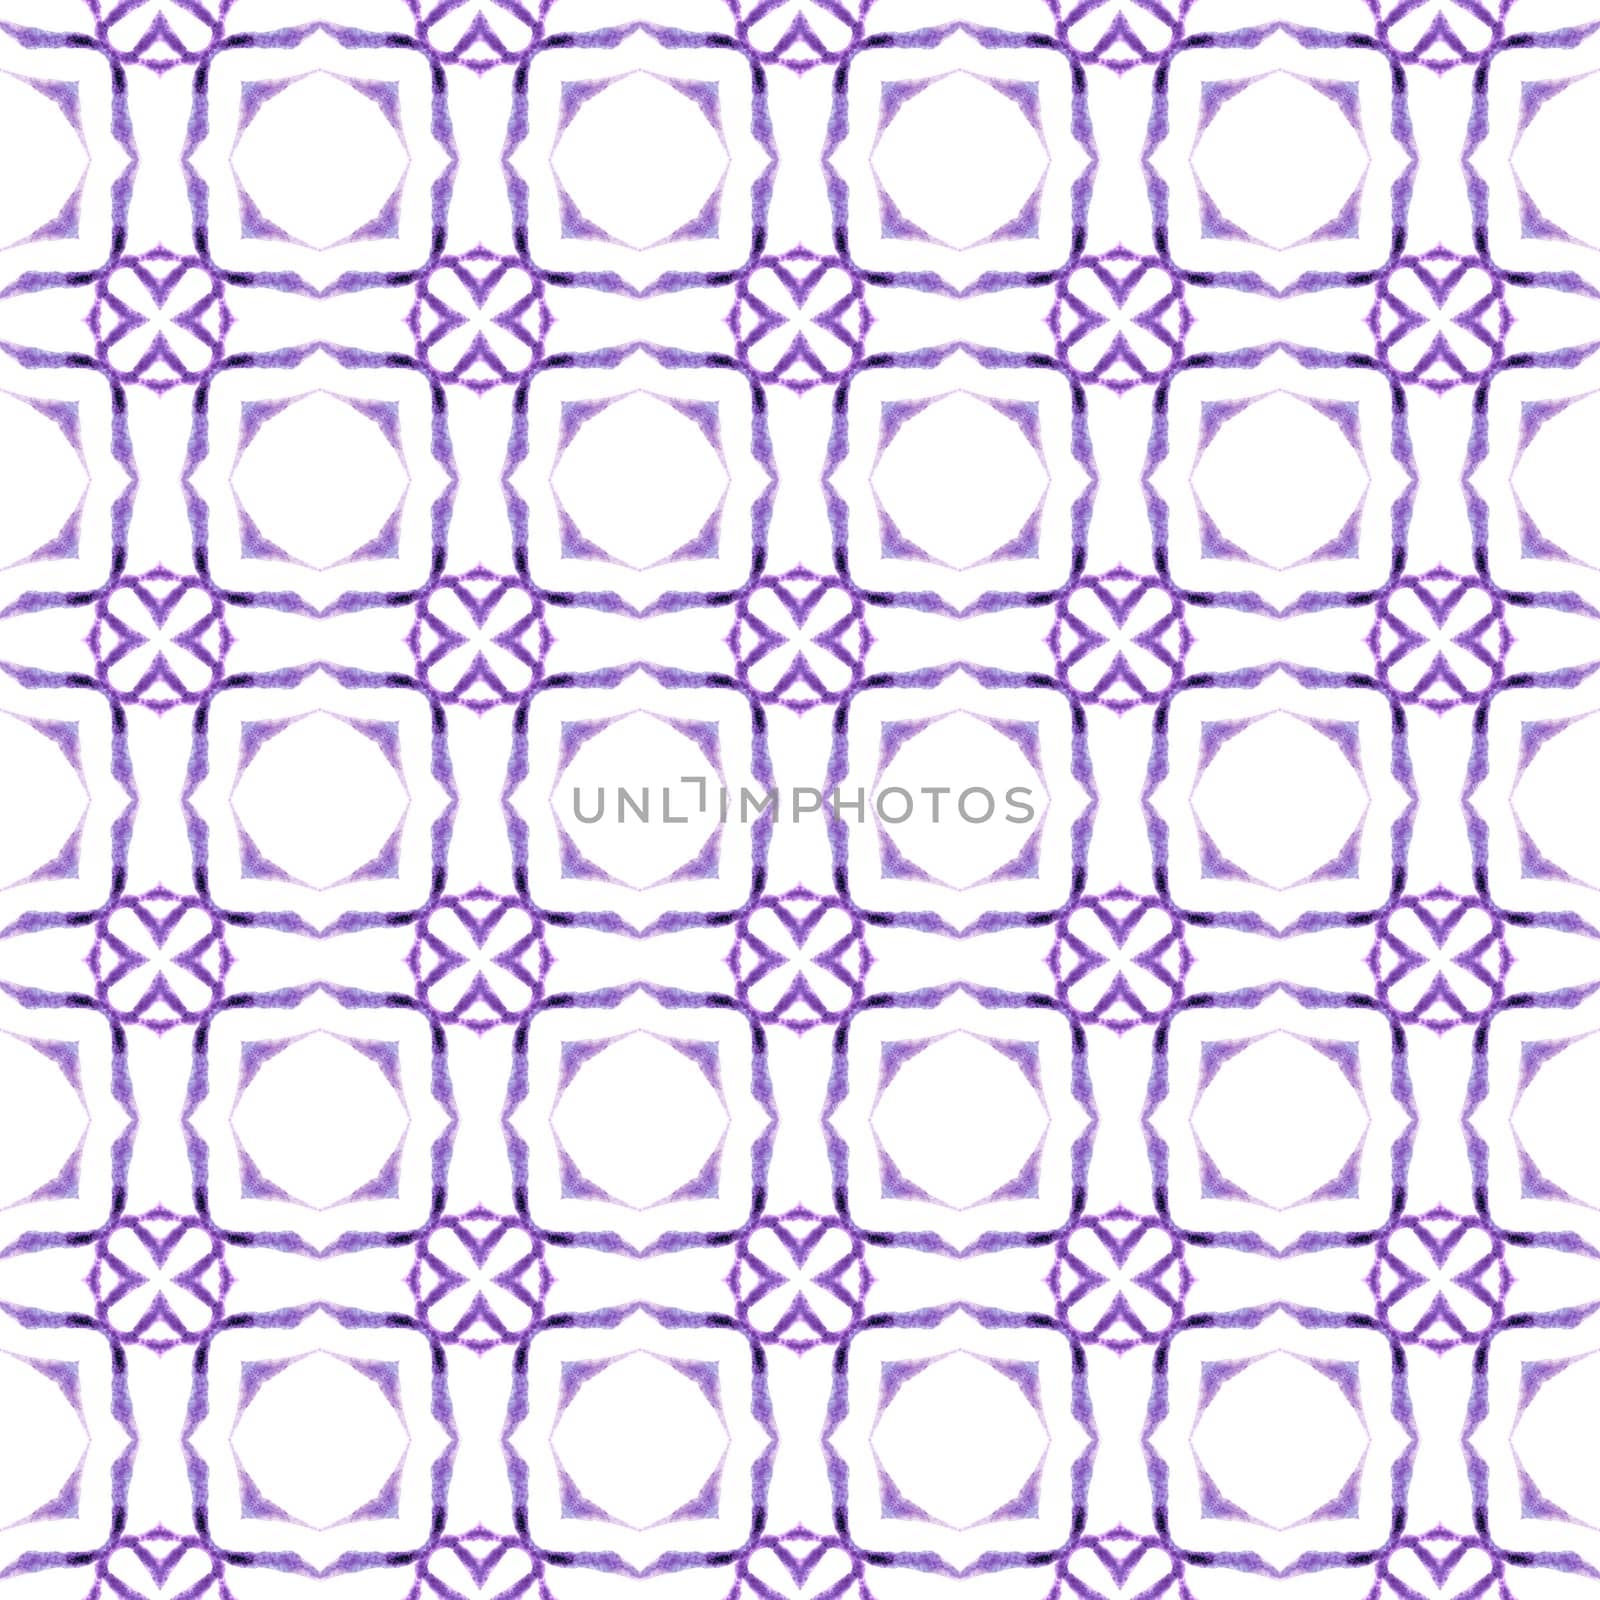 Arabesque hand drawn design. Purple immaculate boho chic summer design. Textile ready fabulous print, swimwear fabric, wallpaper, wrapping. Oriental arabesque hand drawn border.